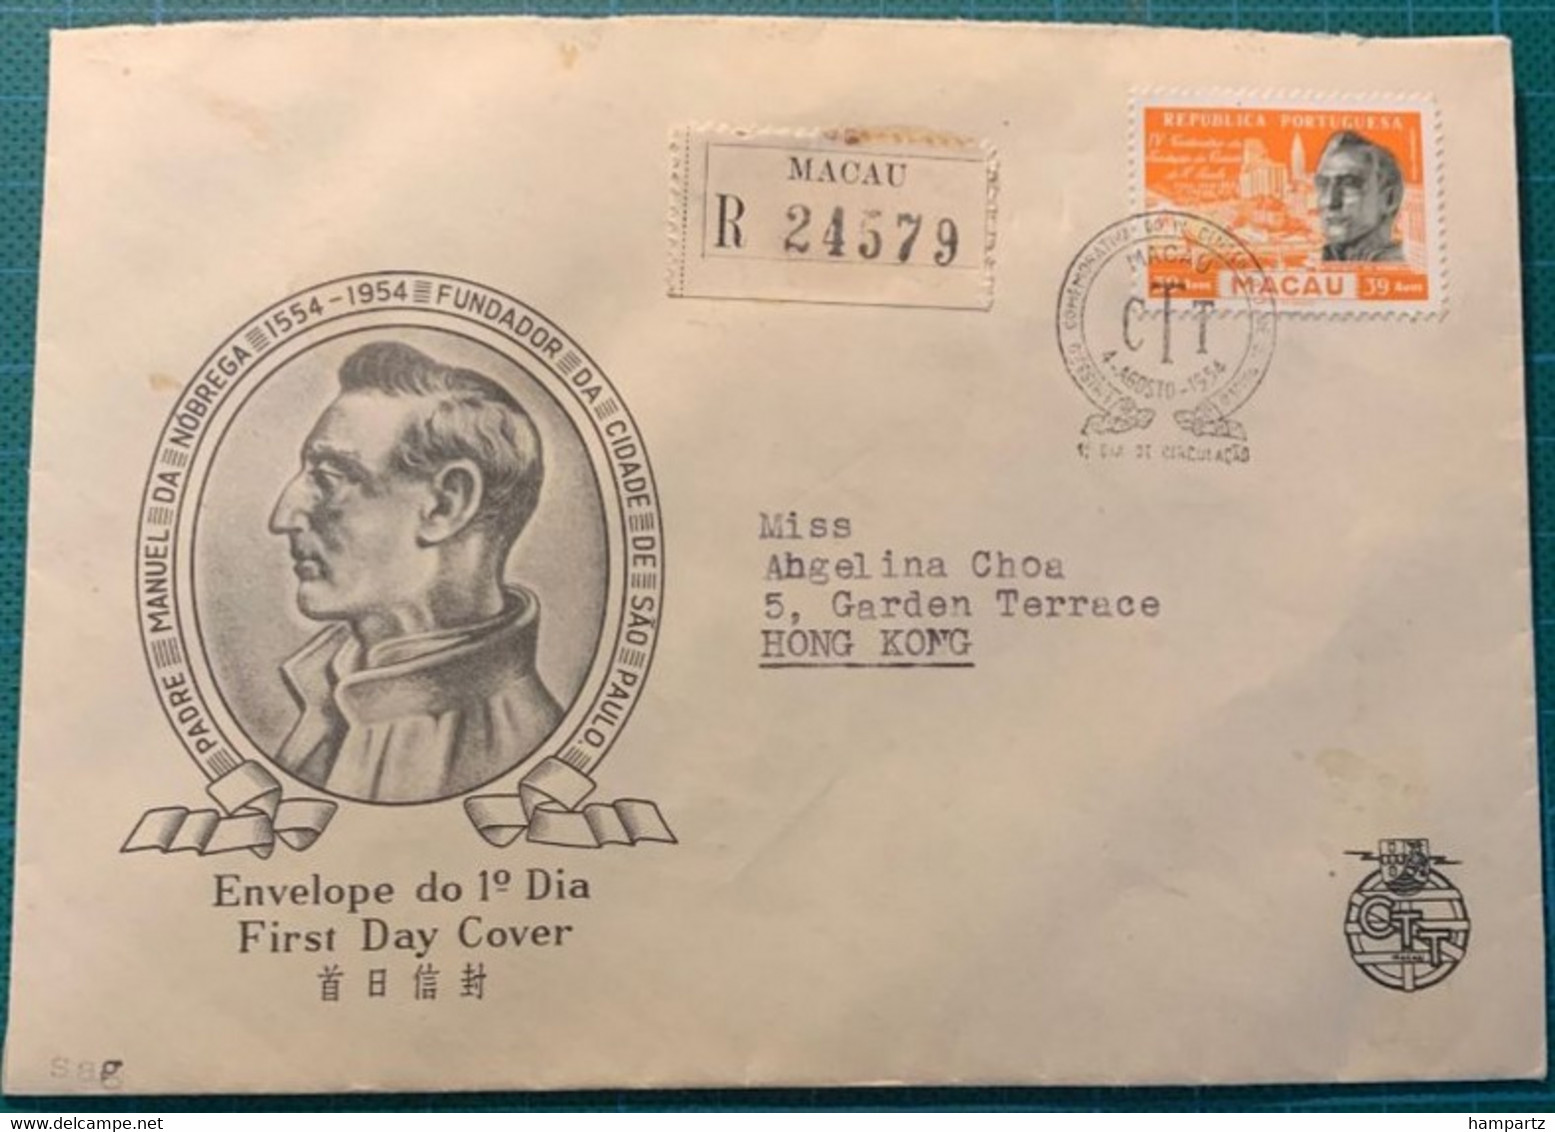 MACAU - MACAO - IV Centenaire De S.PAULO 4 Agusto 1954 1DIA - Jour -lettre Recommandée Pour HONG KONG - Briefe U. Dokumente